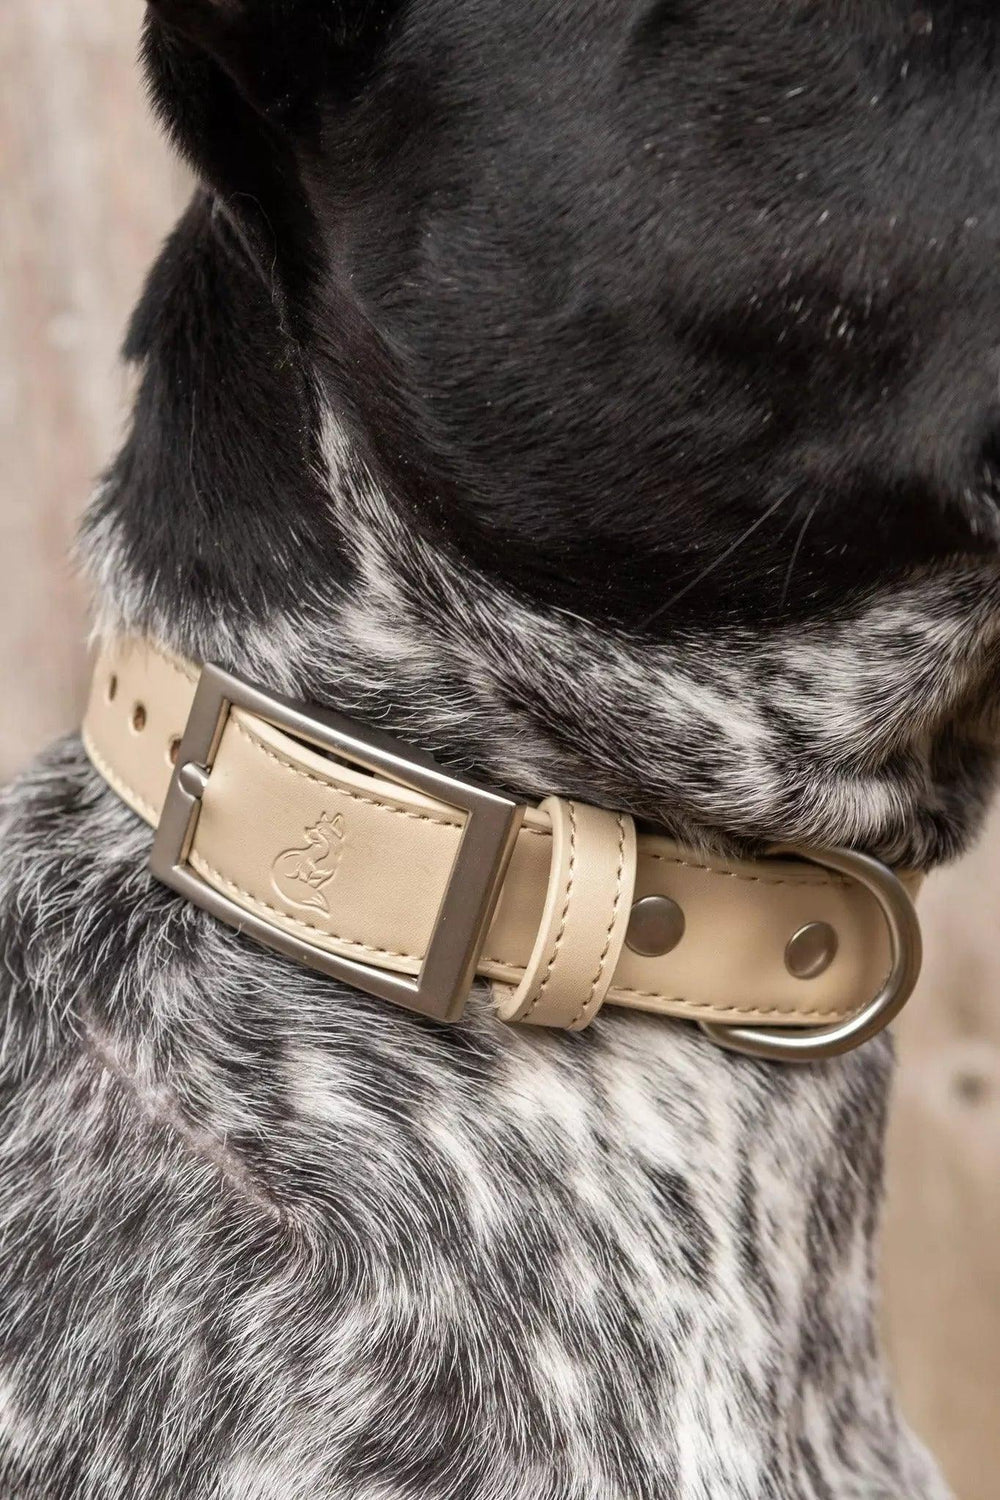 Champagne Fizz Vegan Leather Dog Collar Collar